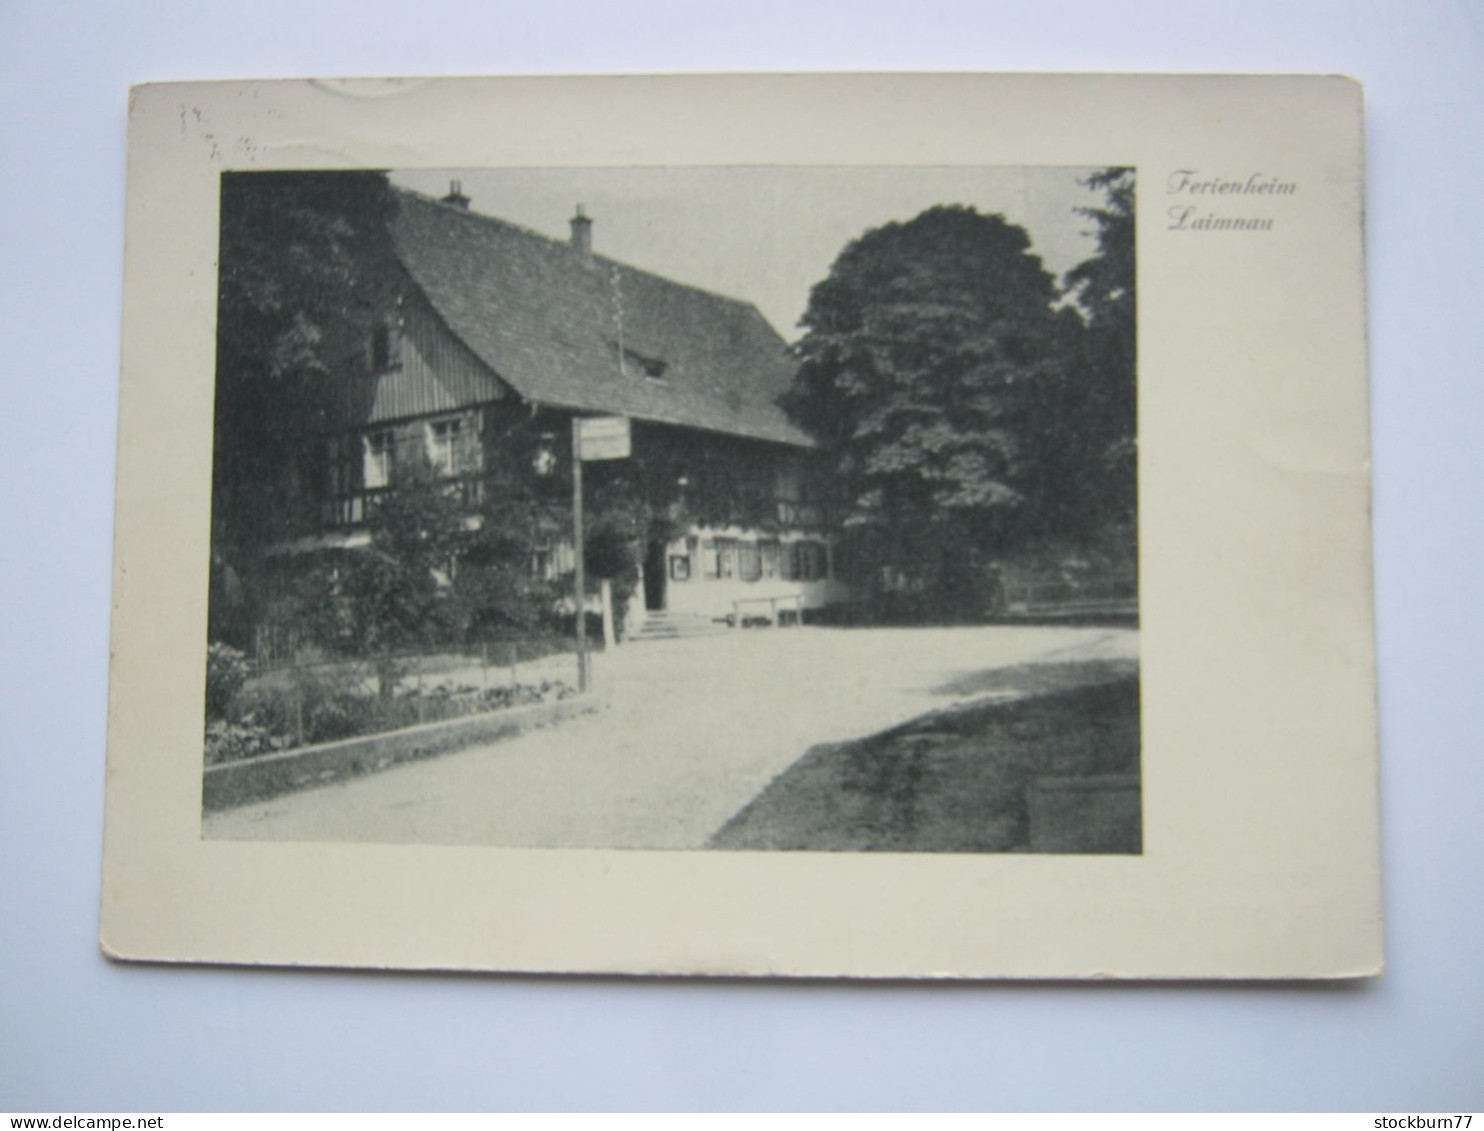 TETTNANG , Laimnau , Ferienheim  ,  Schöne Karte Um 1930 - Tettnang